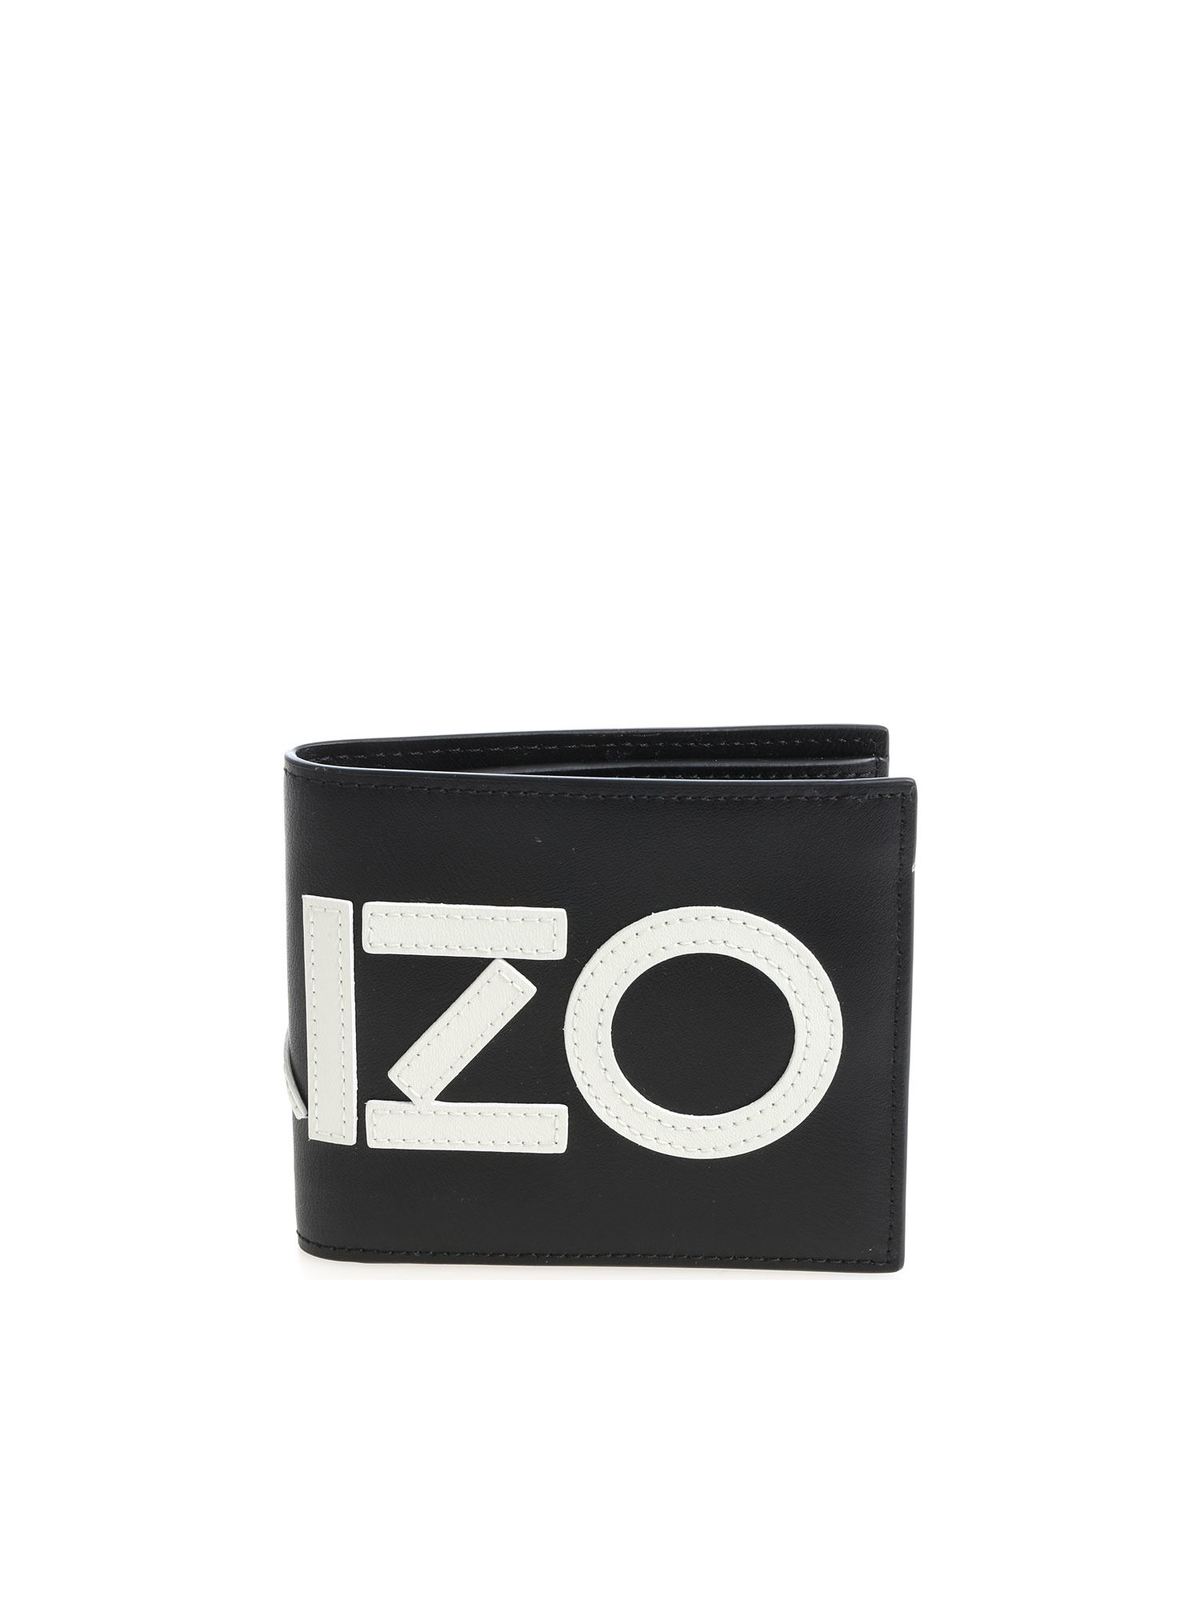 kenzo logo wallet